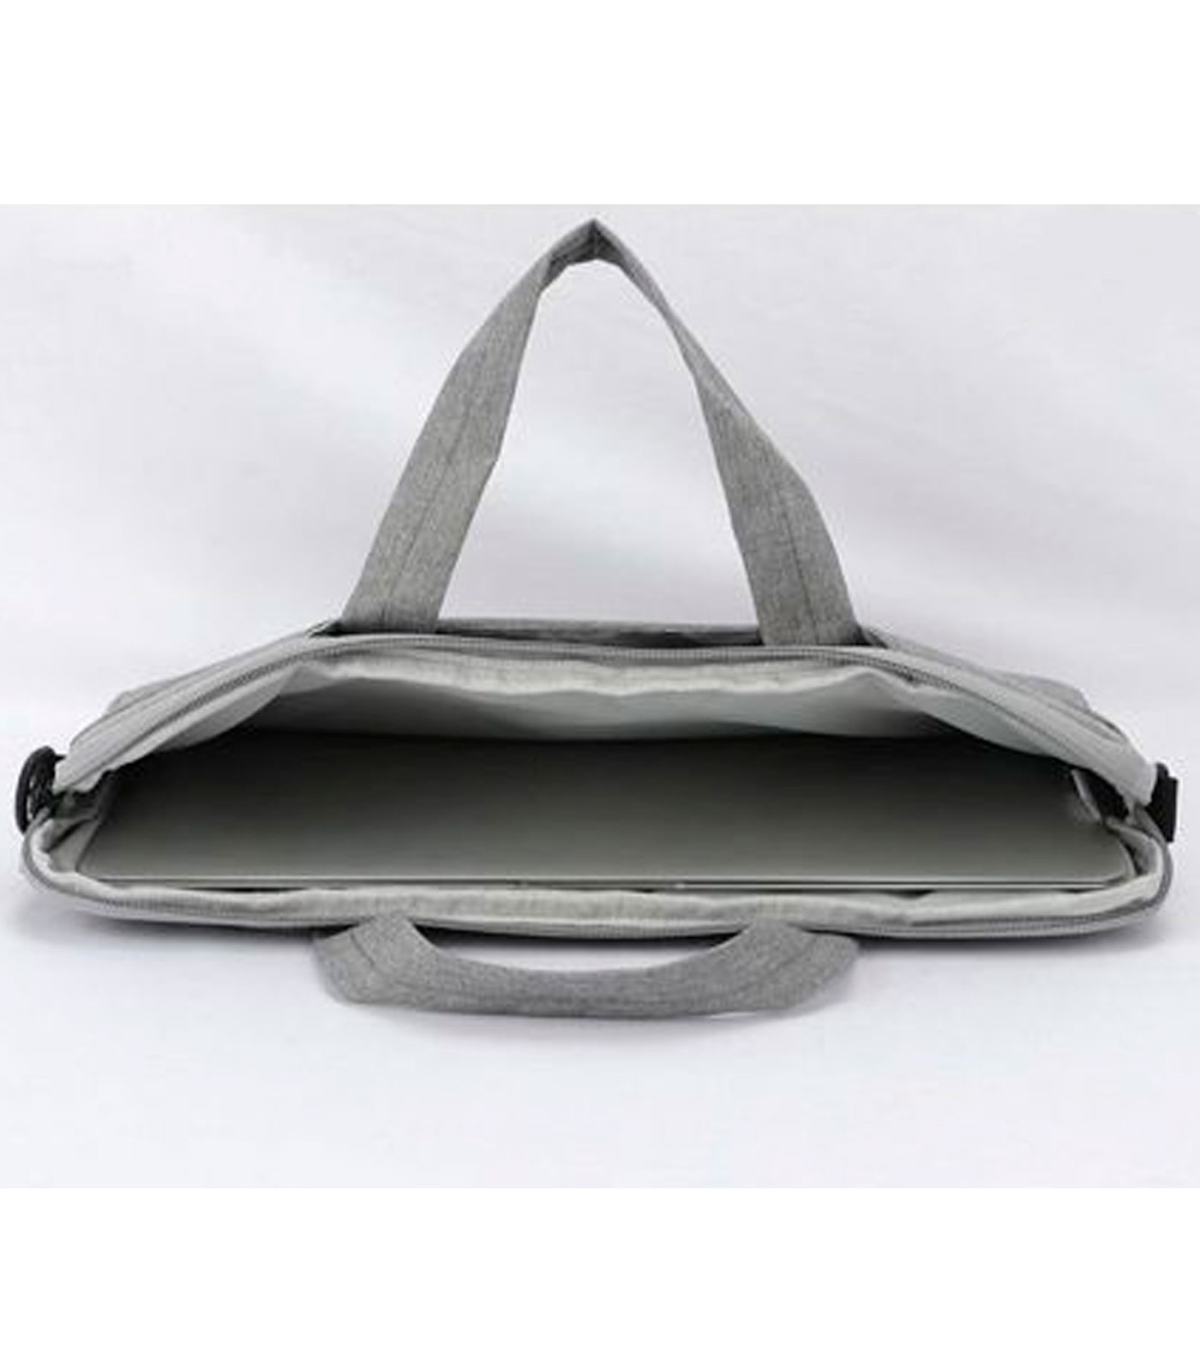 Tradineur - Bolsa para portátil de 13-14 pulgadas, bolso, maletín,  bandolera, funda de tela impermeable con asas y correa de hom